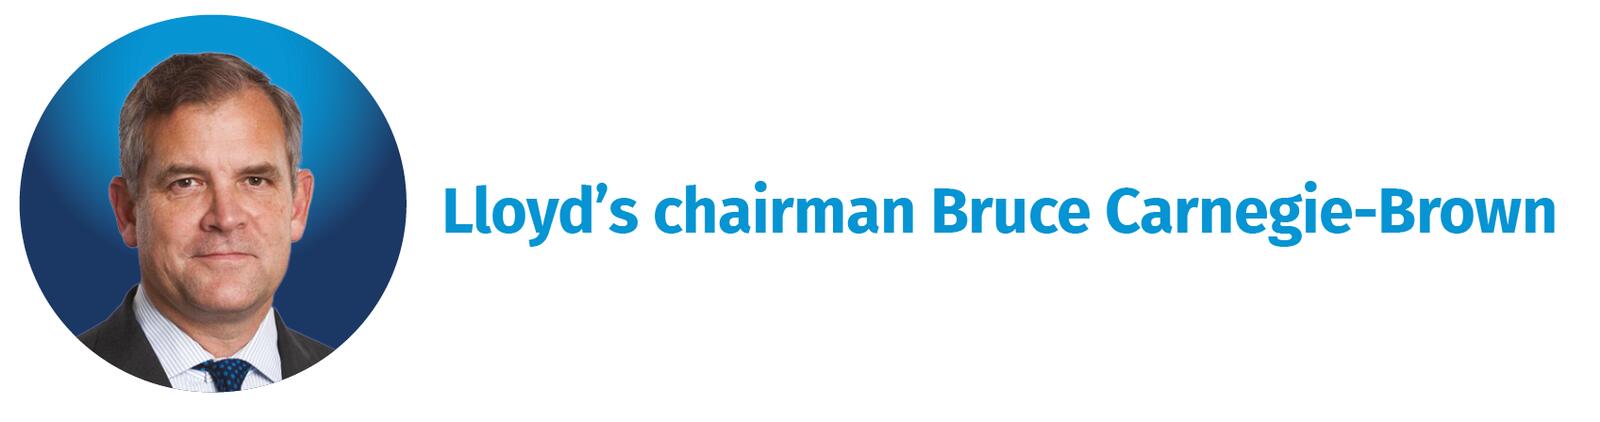 Lloyd’s chairman Bruce Carnegie-Brown